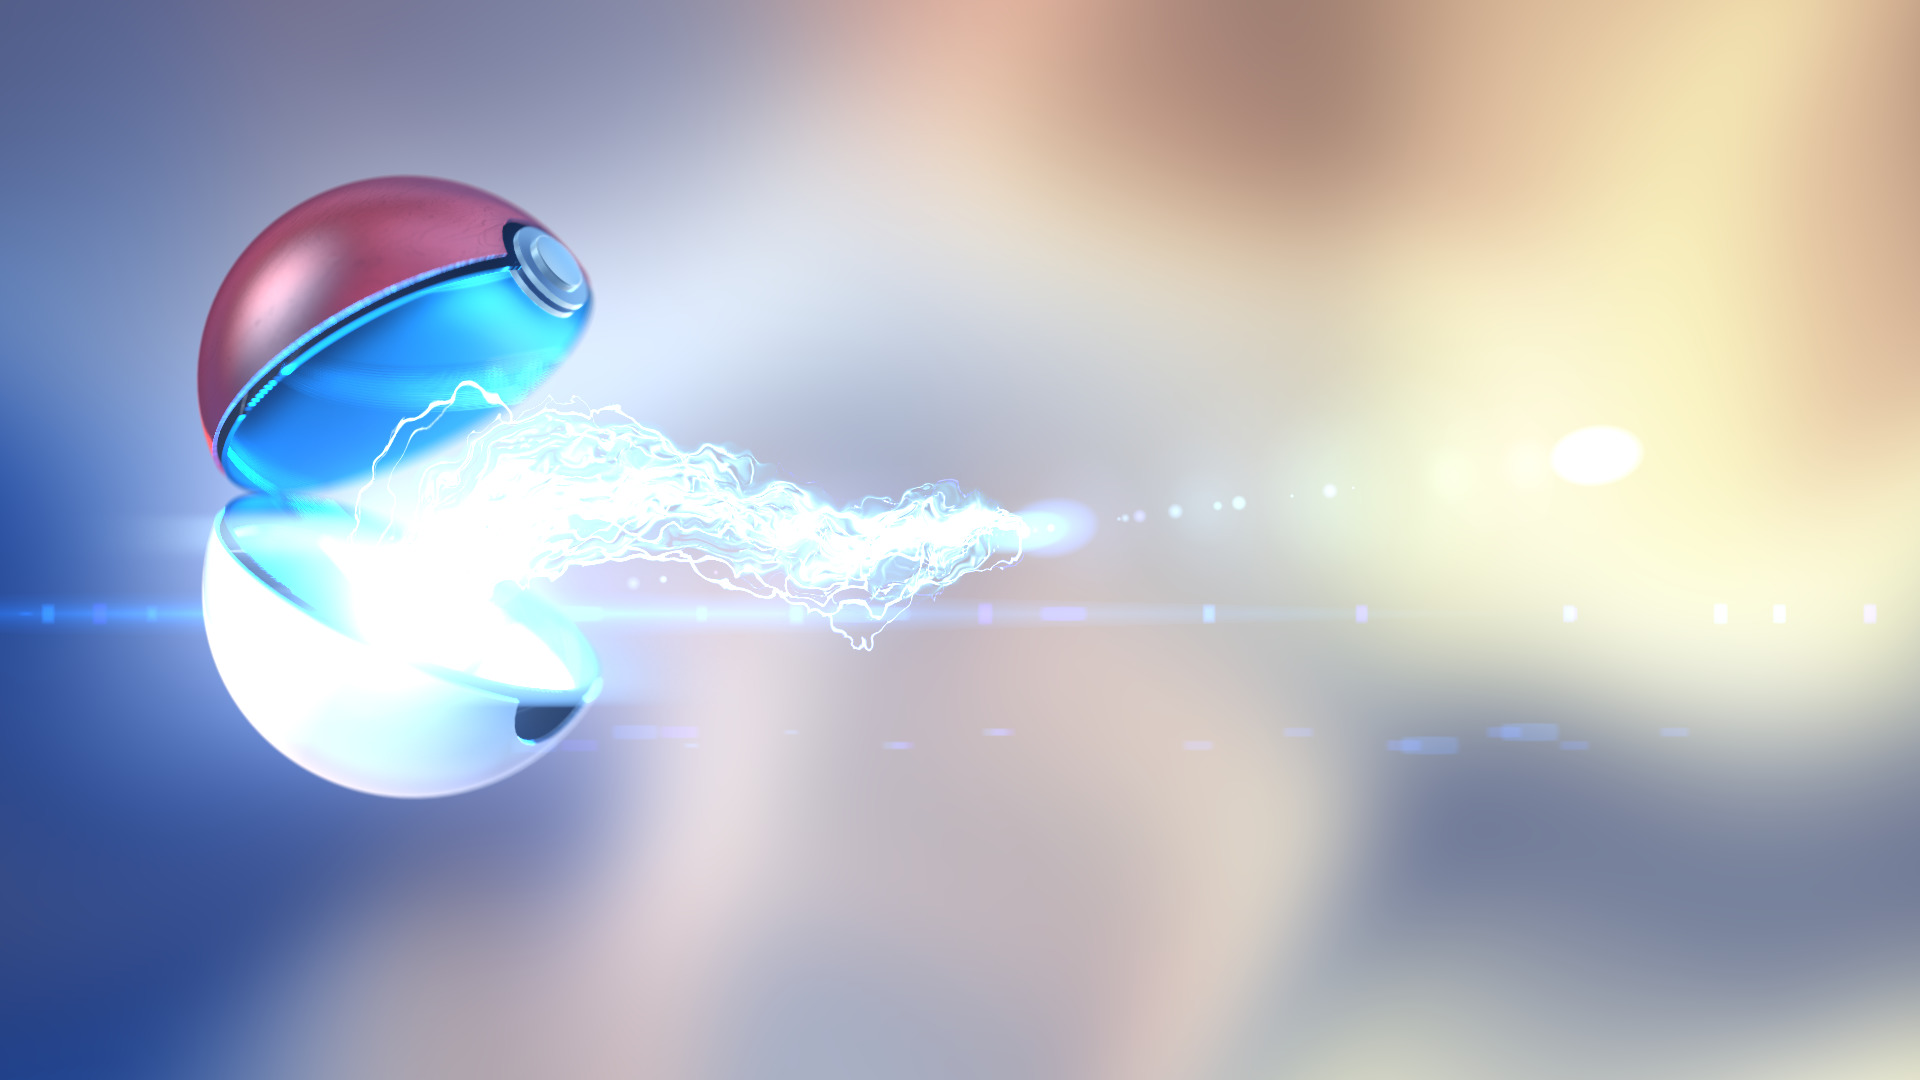 Pokemon Crystal, CGI, 3D, Colorful, Digital art Wallpaper HD / Desktop and Mobile Background